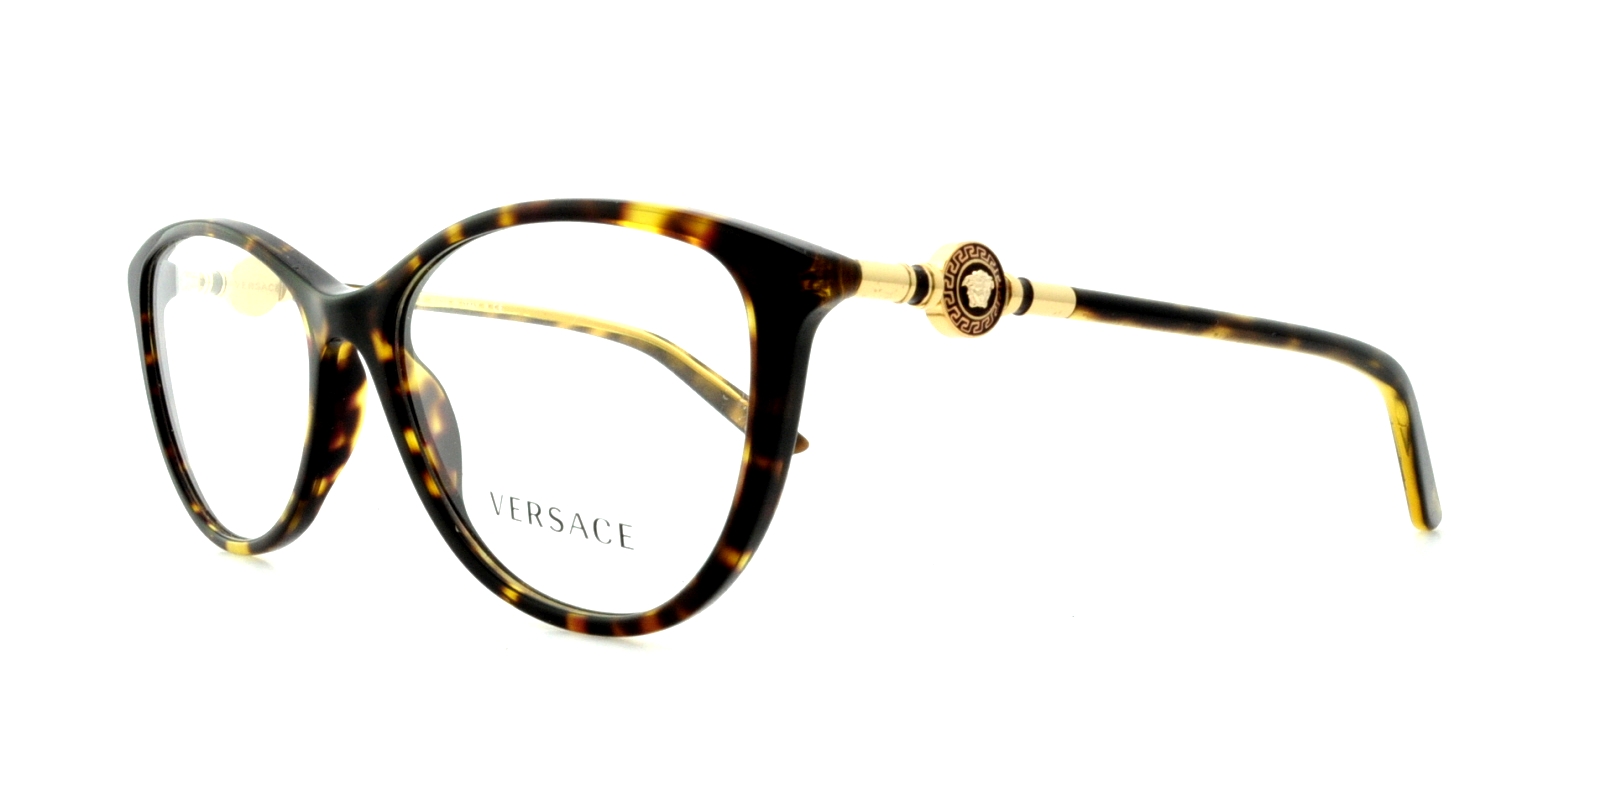 Picture of Versace Eyeglasses VE3175